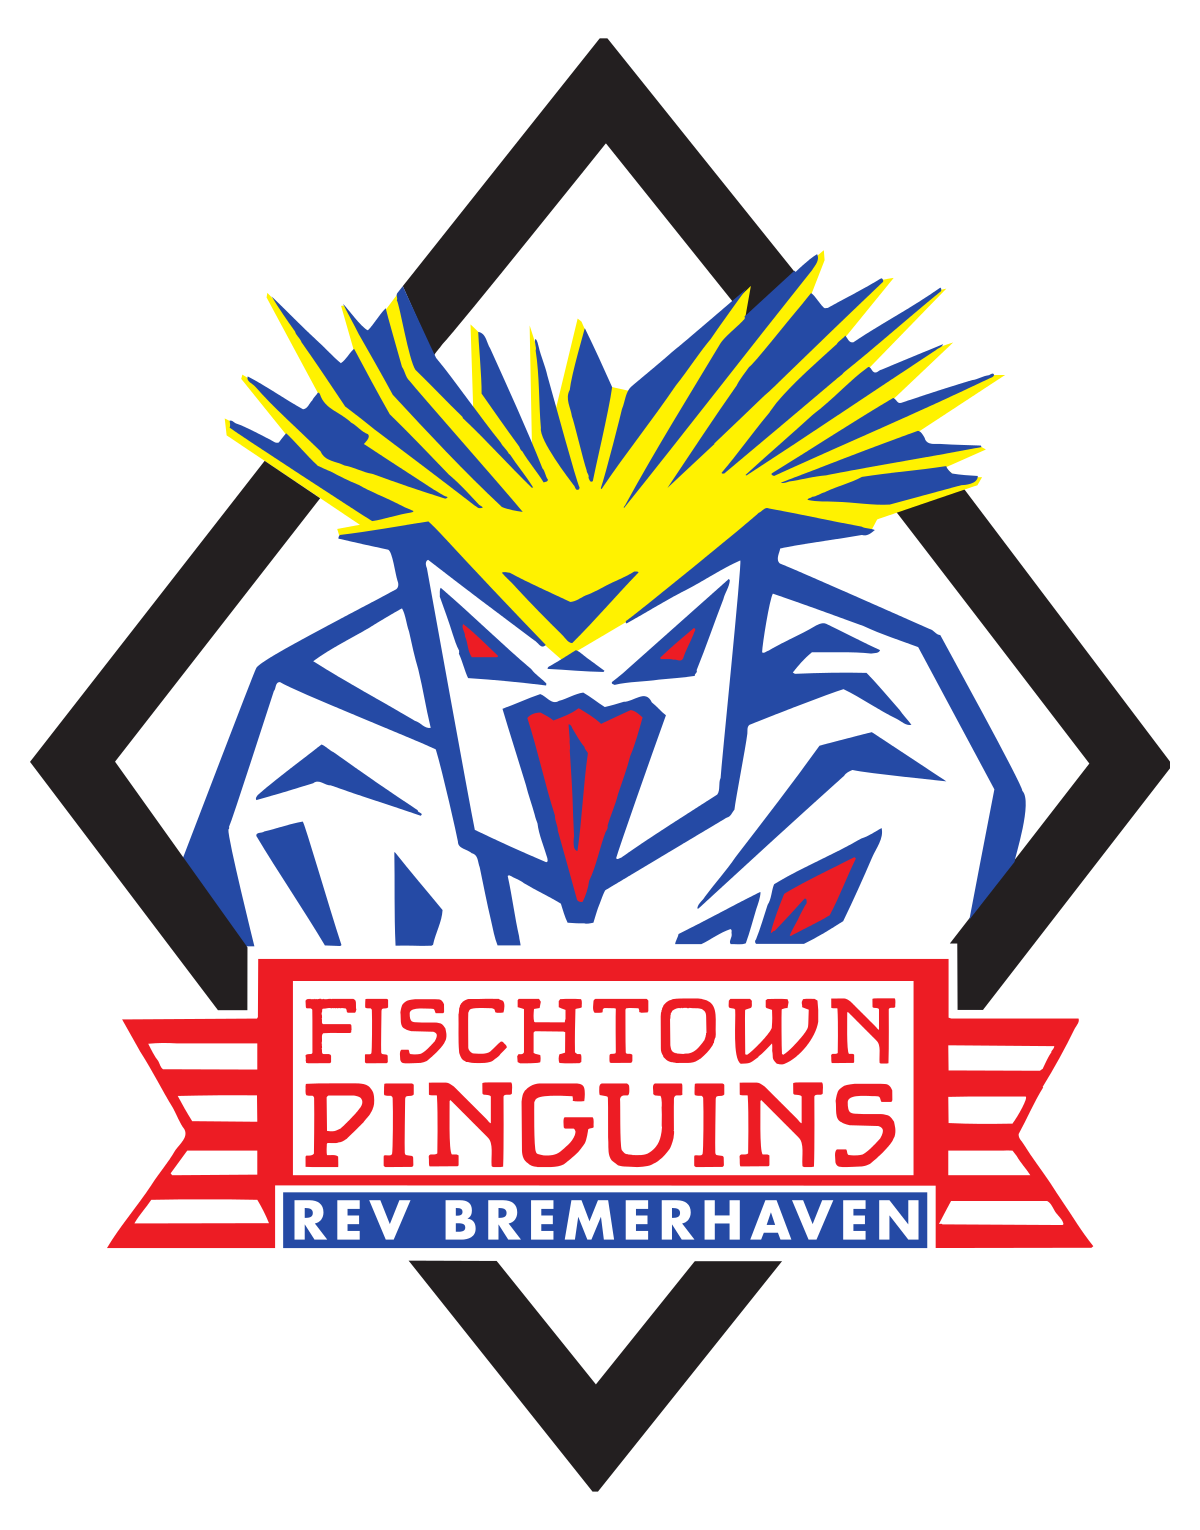 Fishtown Pinguins Bremerhaven